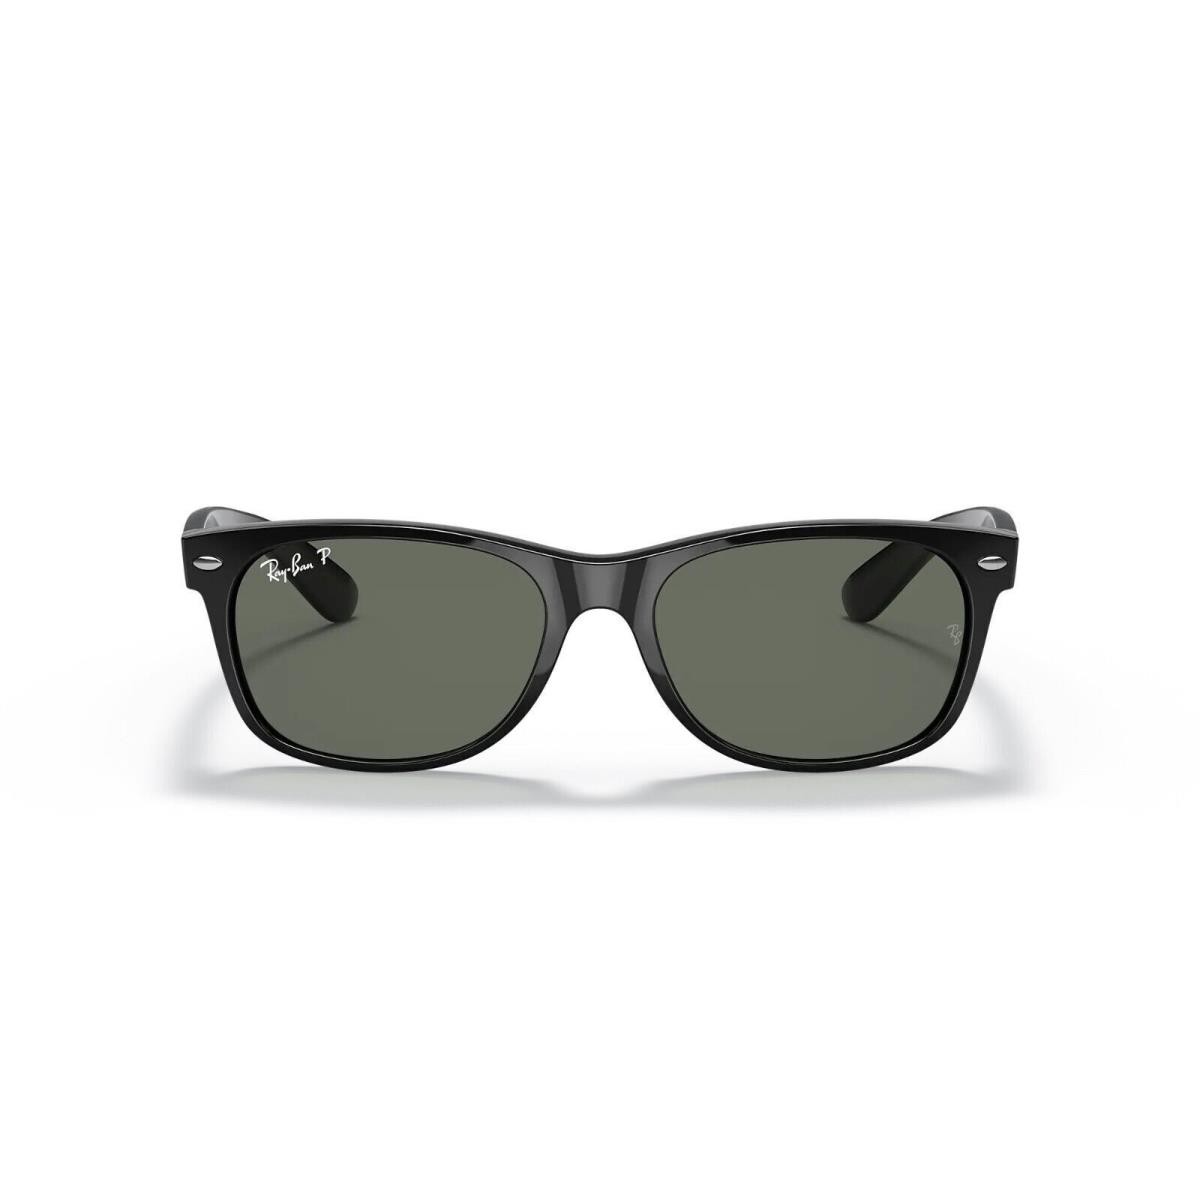 Ray-ban New Wayfarer Classic Rayban Wayfarer Classic Black/green Polarized 55 Sunglasses RB2132 901/58 55 - Frame: Black, Lens: Green